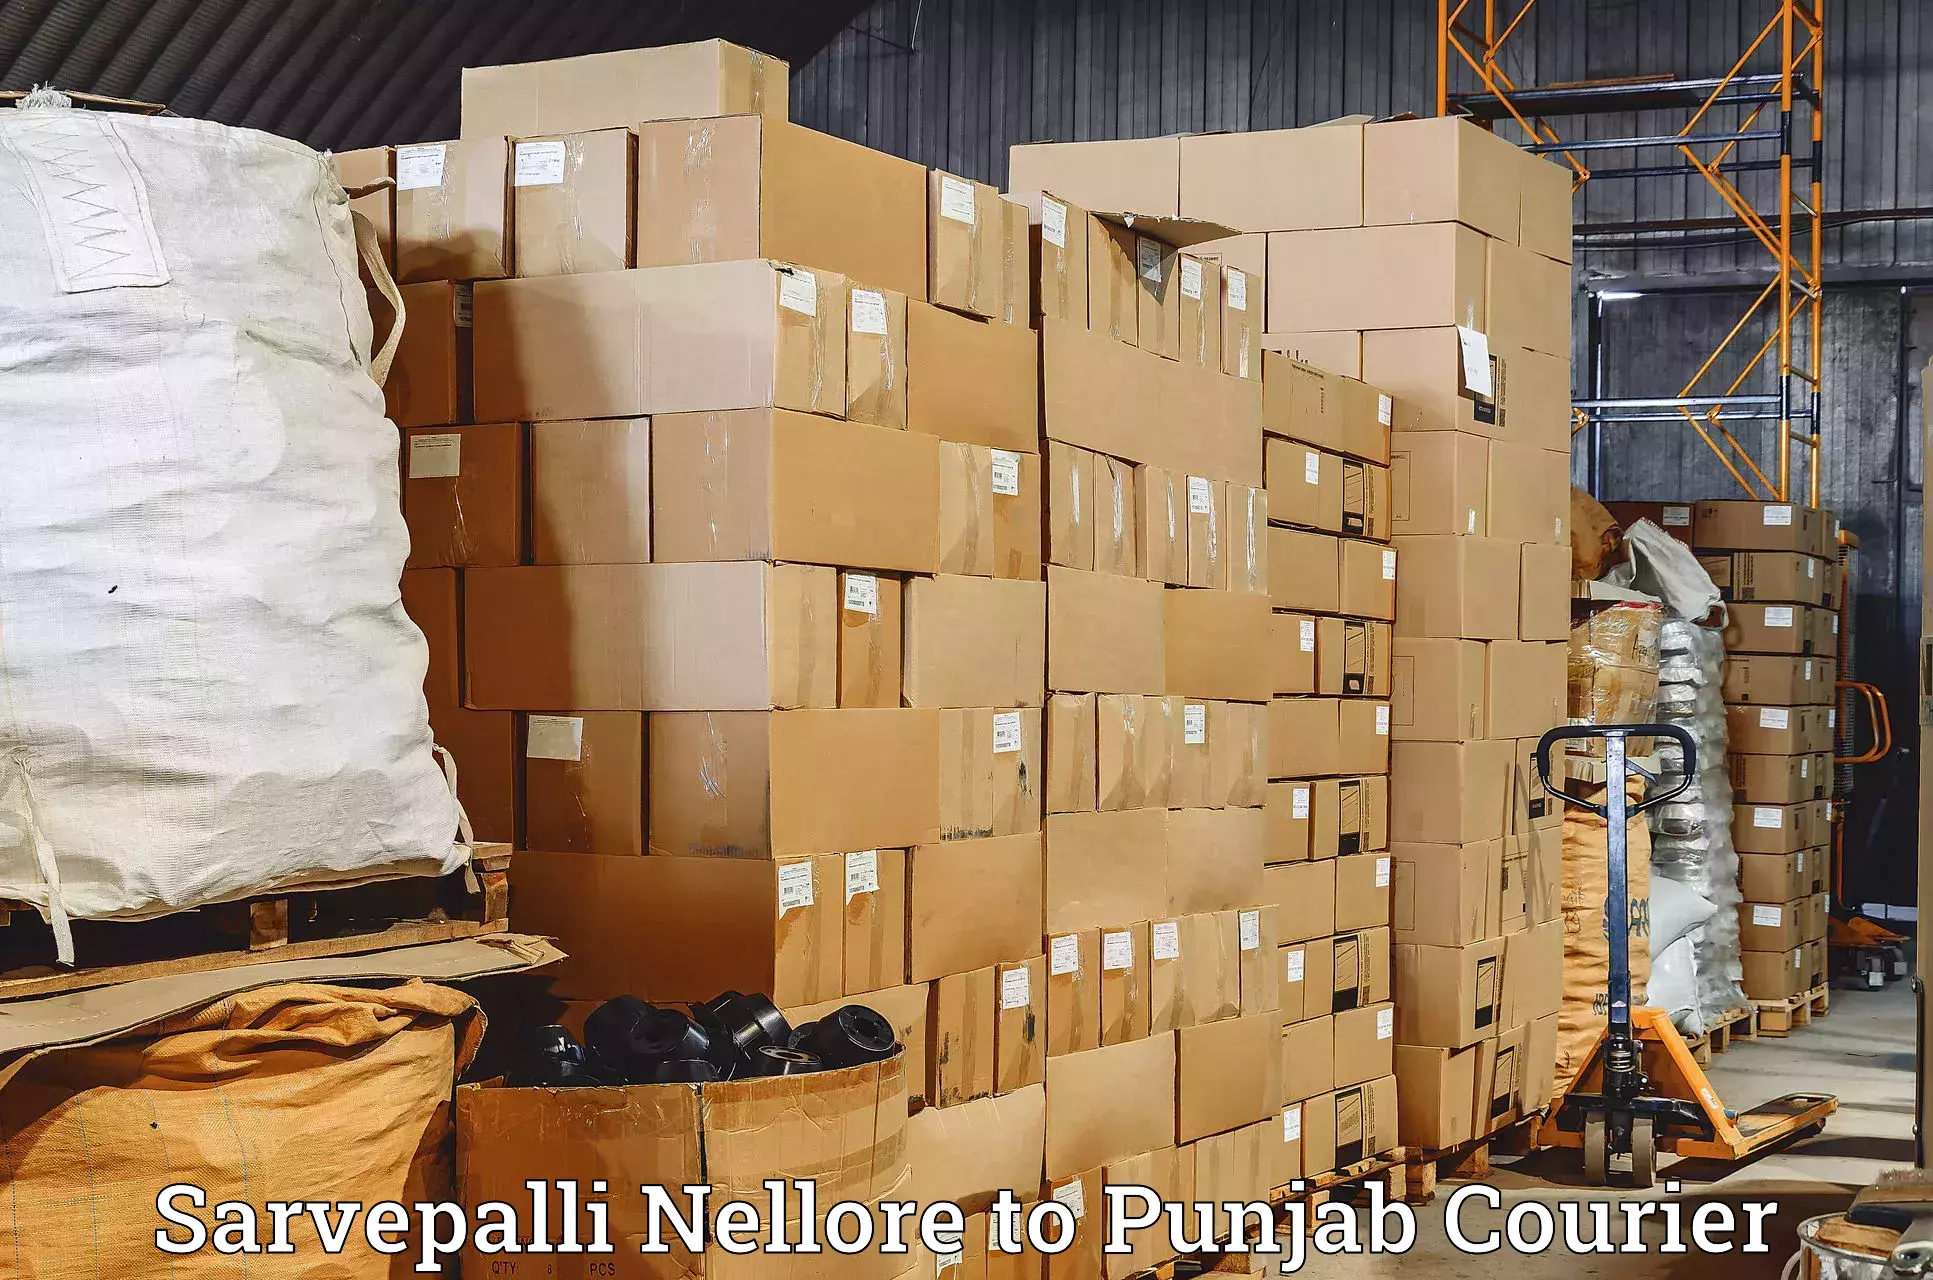 Enhanced tracking features Sarvepalli Nellore to Punjab